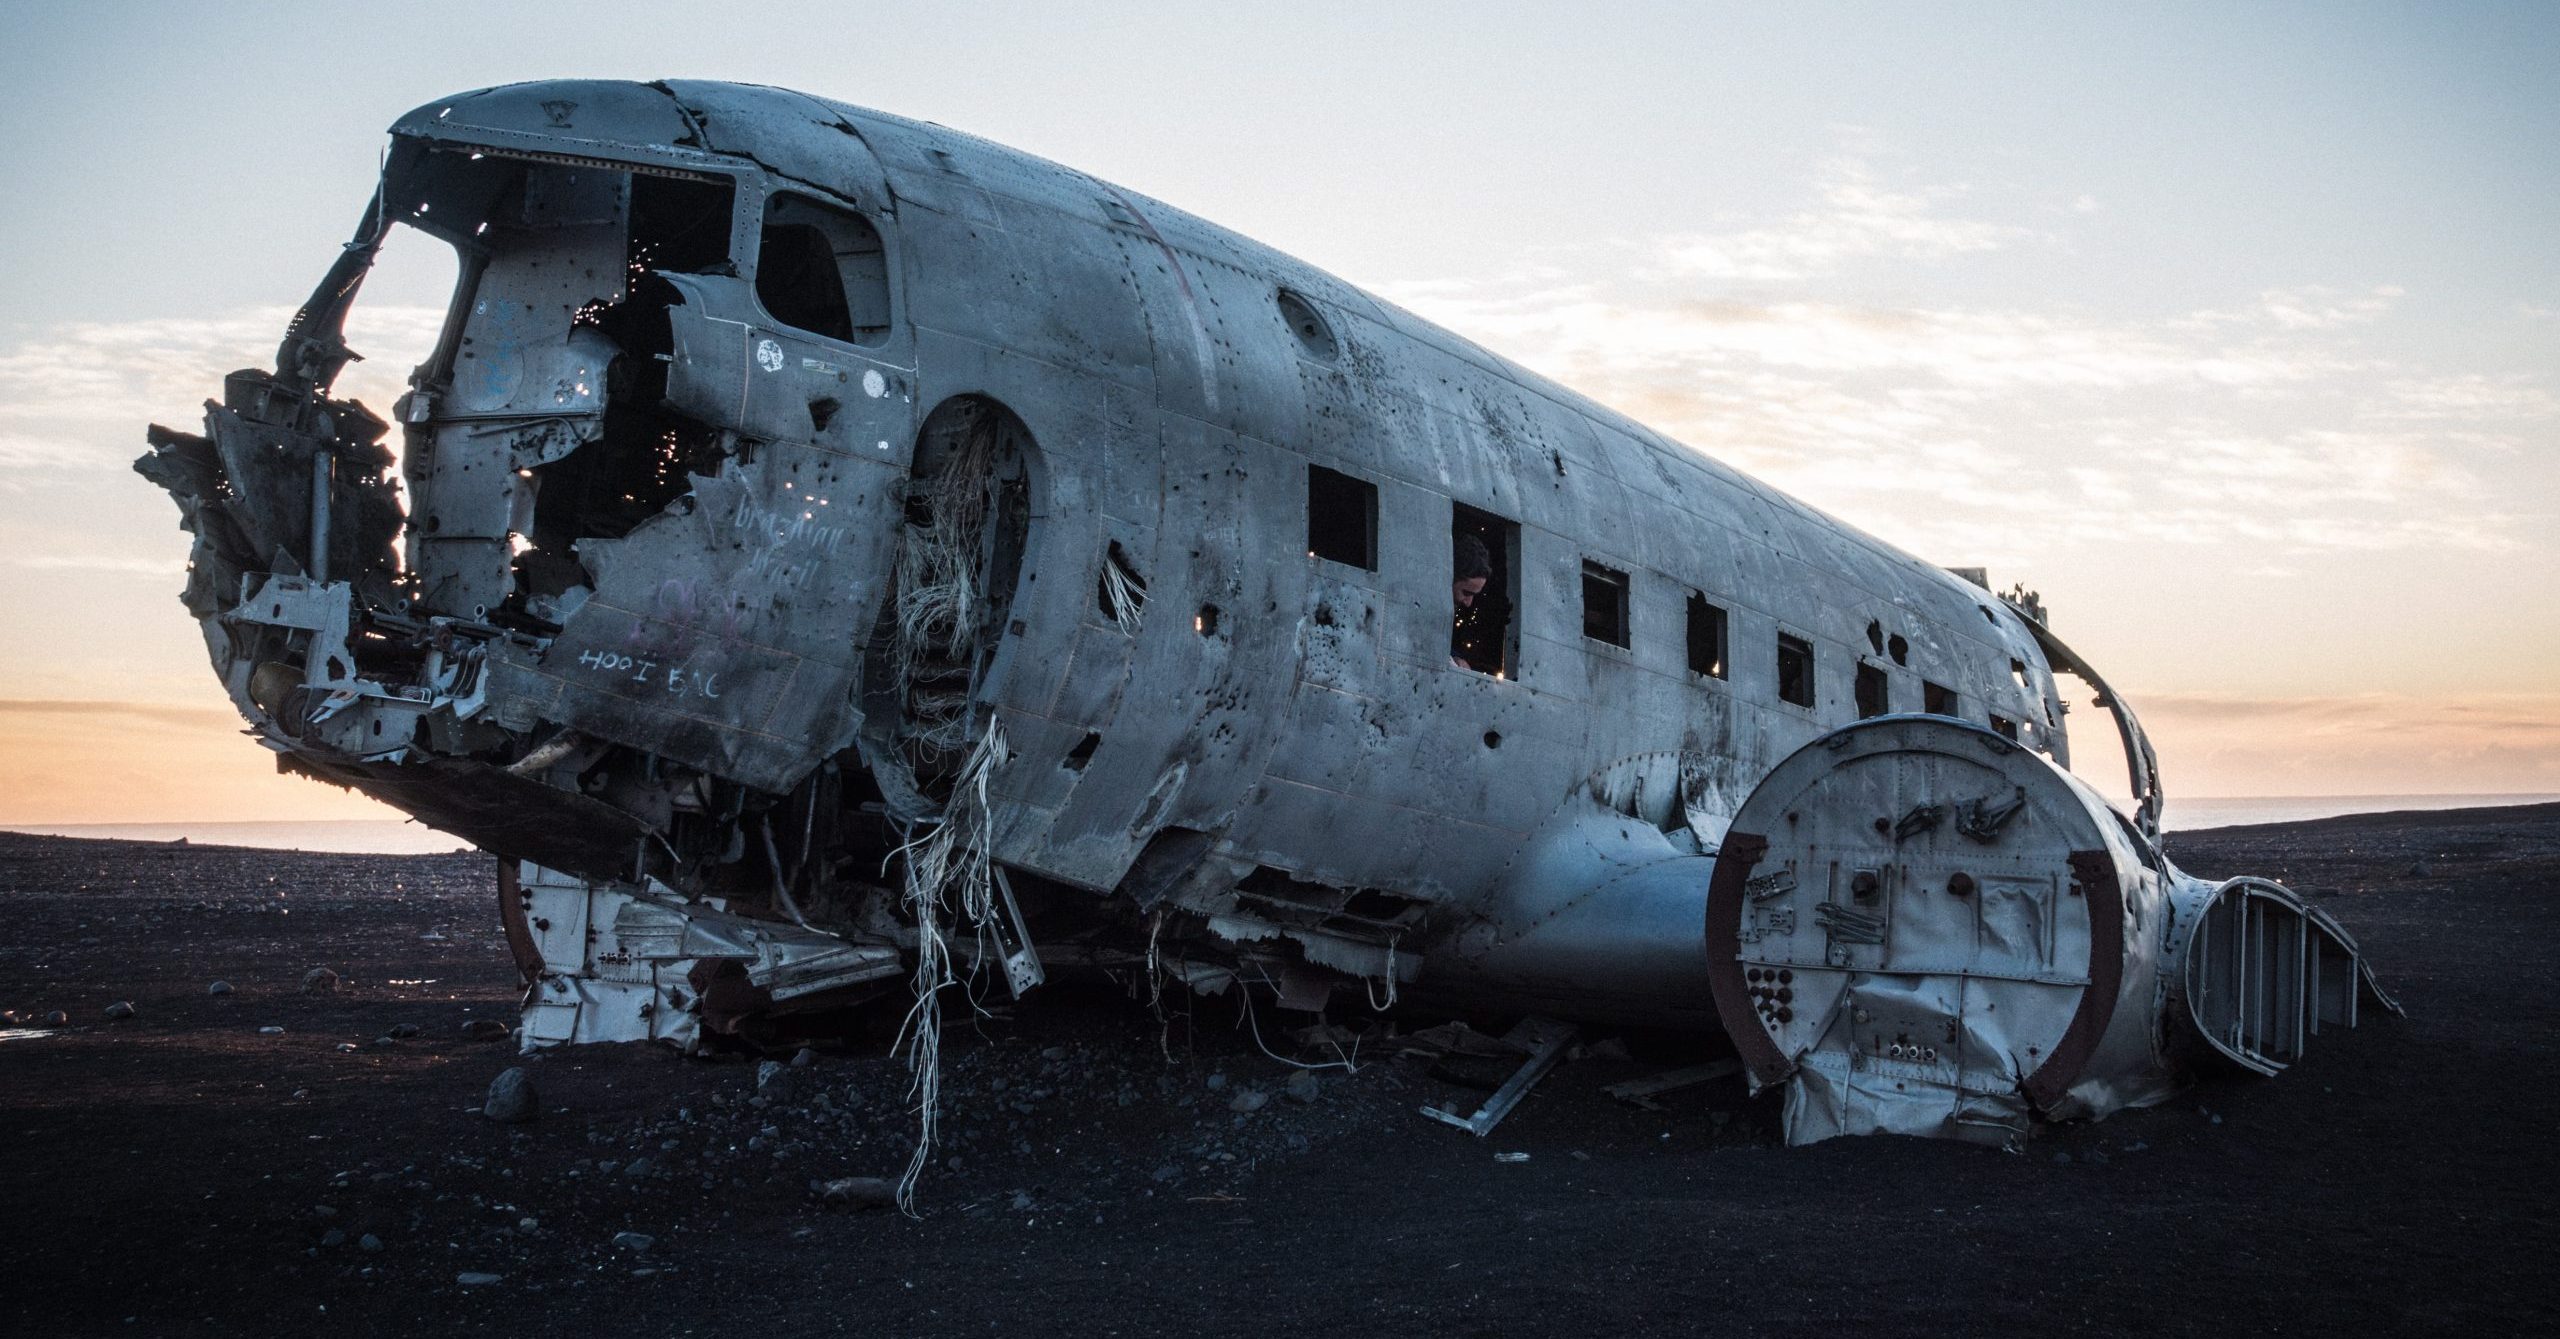 CNN Video: Deadly Plane Crash